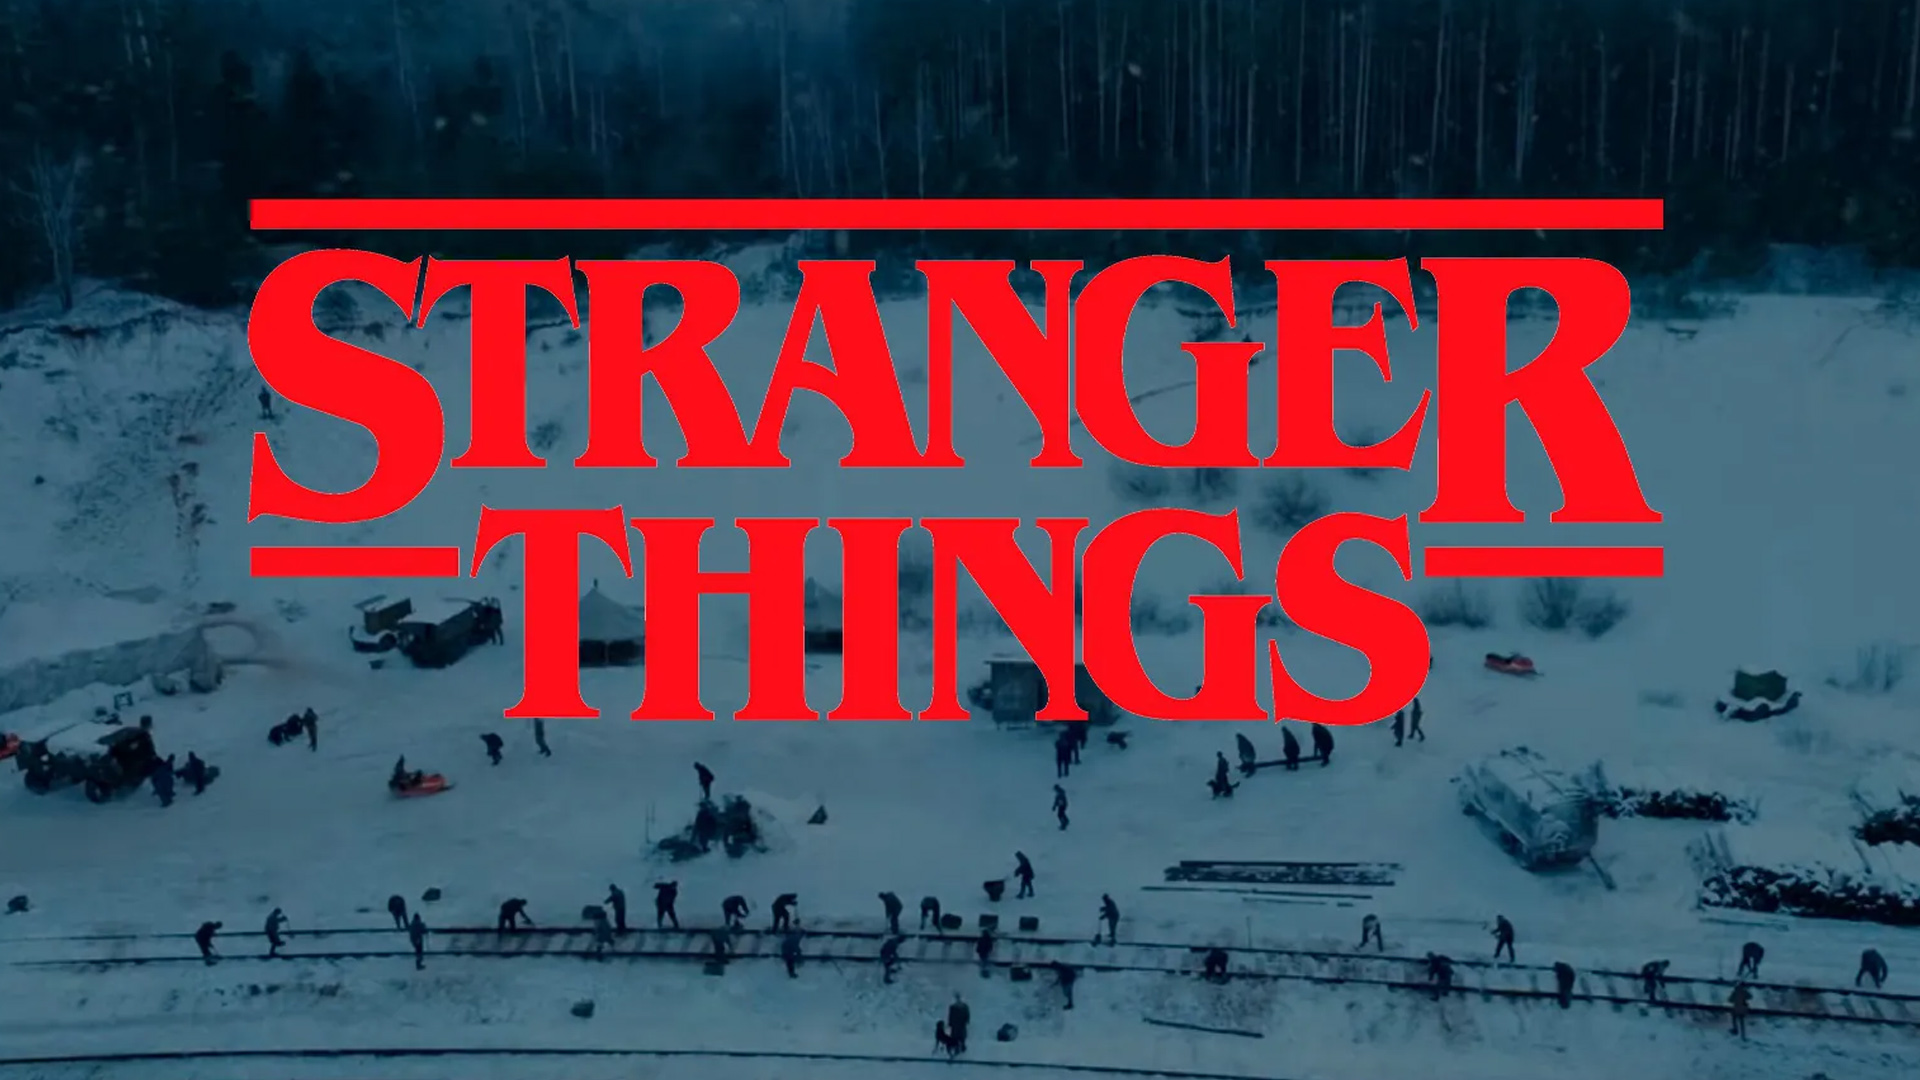 ‘Strangers Things 4’